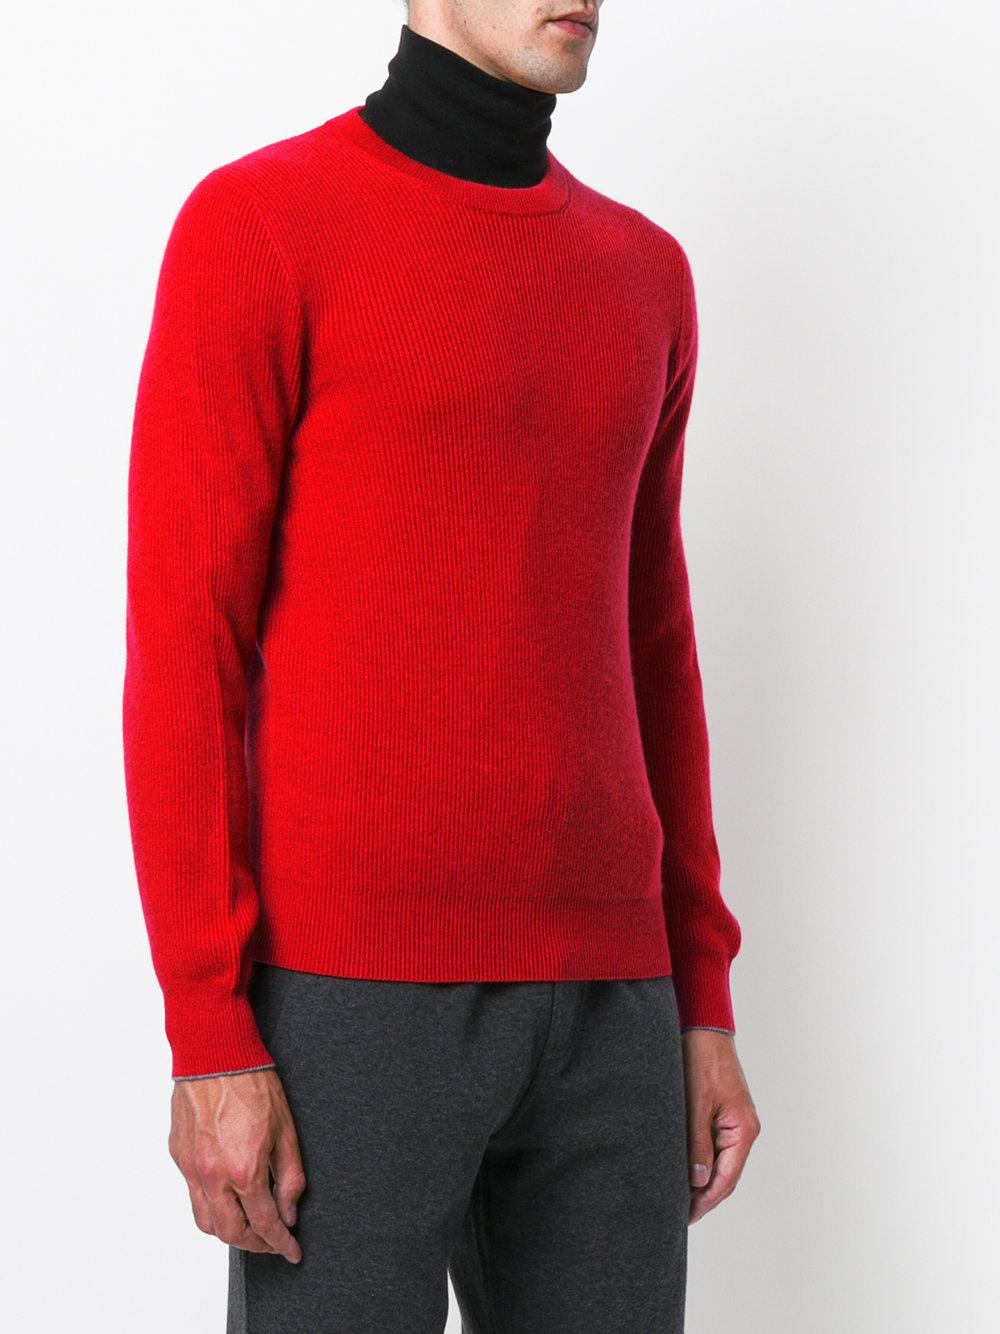 Brunello Cucinelli Cashmere Sweater in Red for Men - Lyst